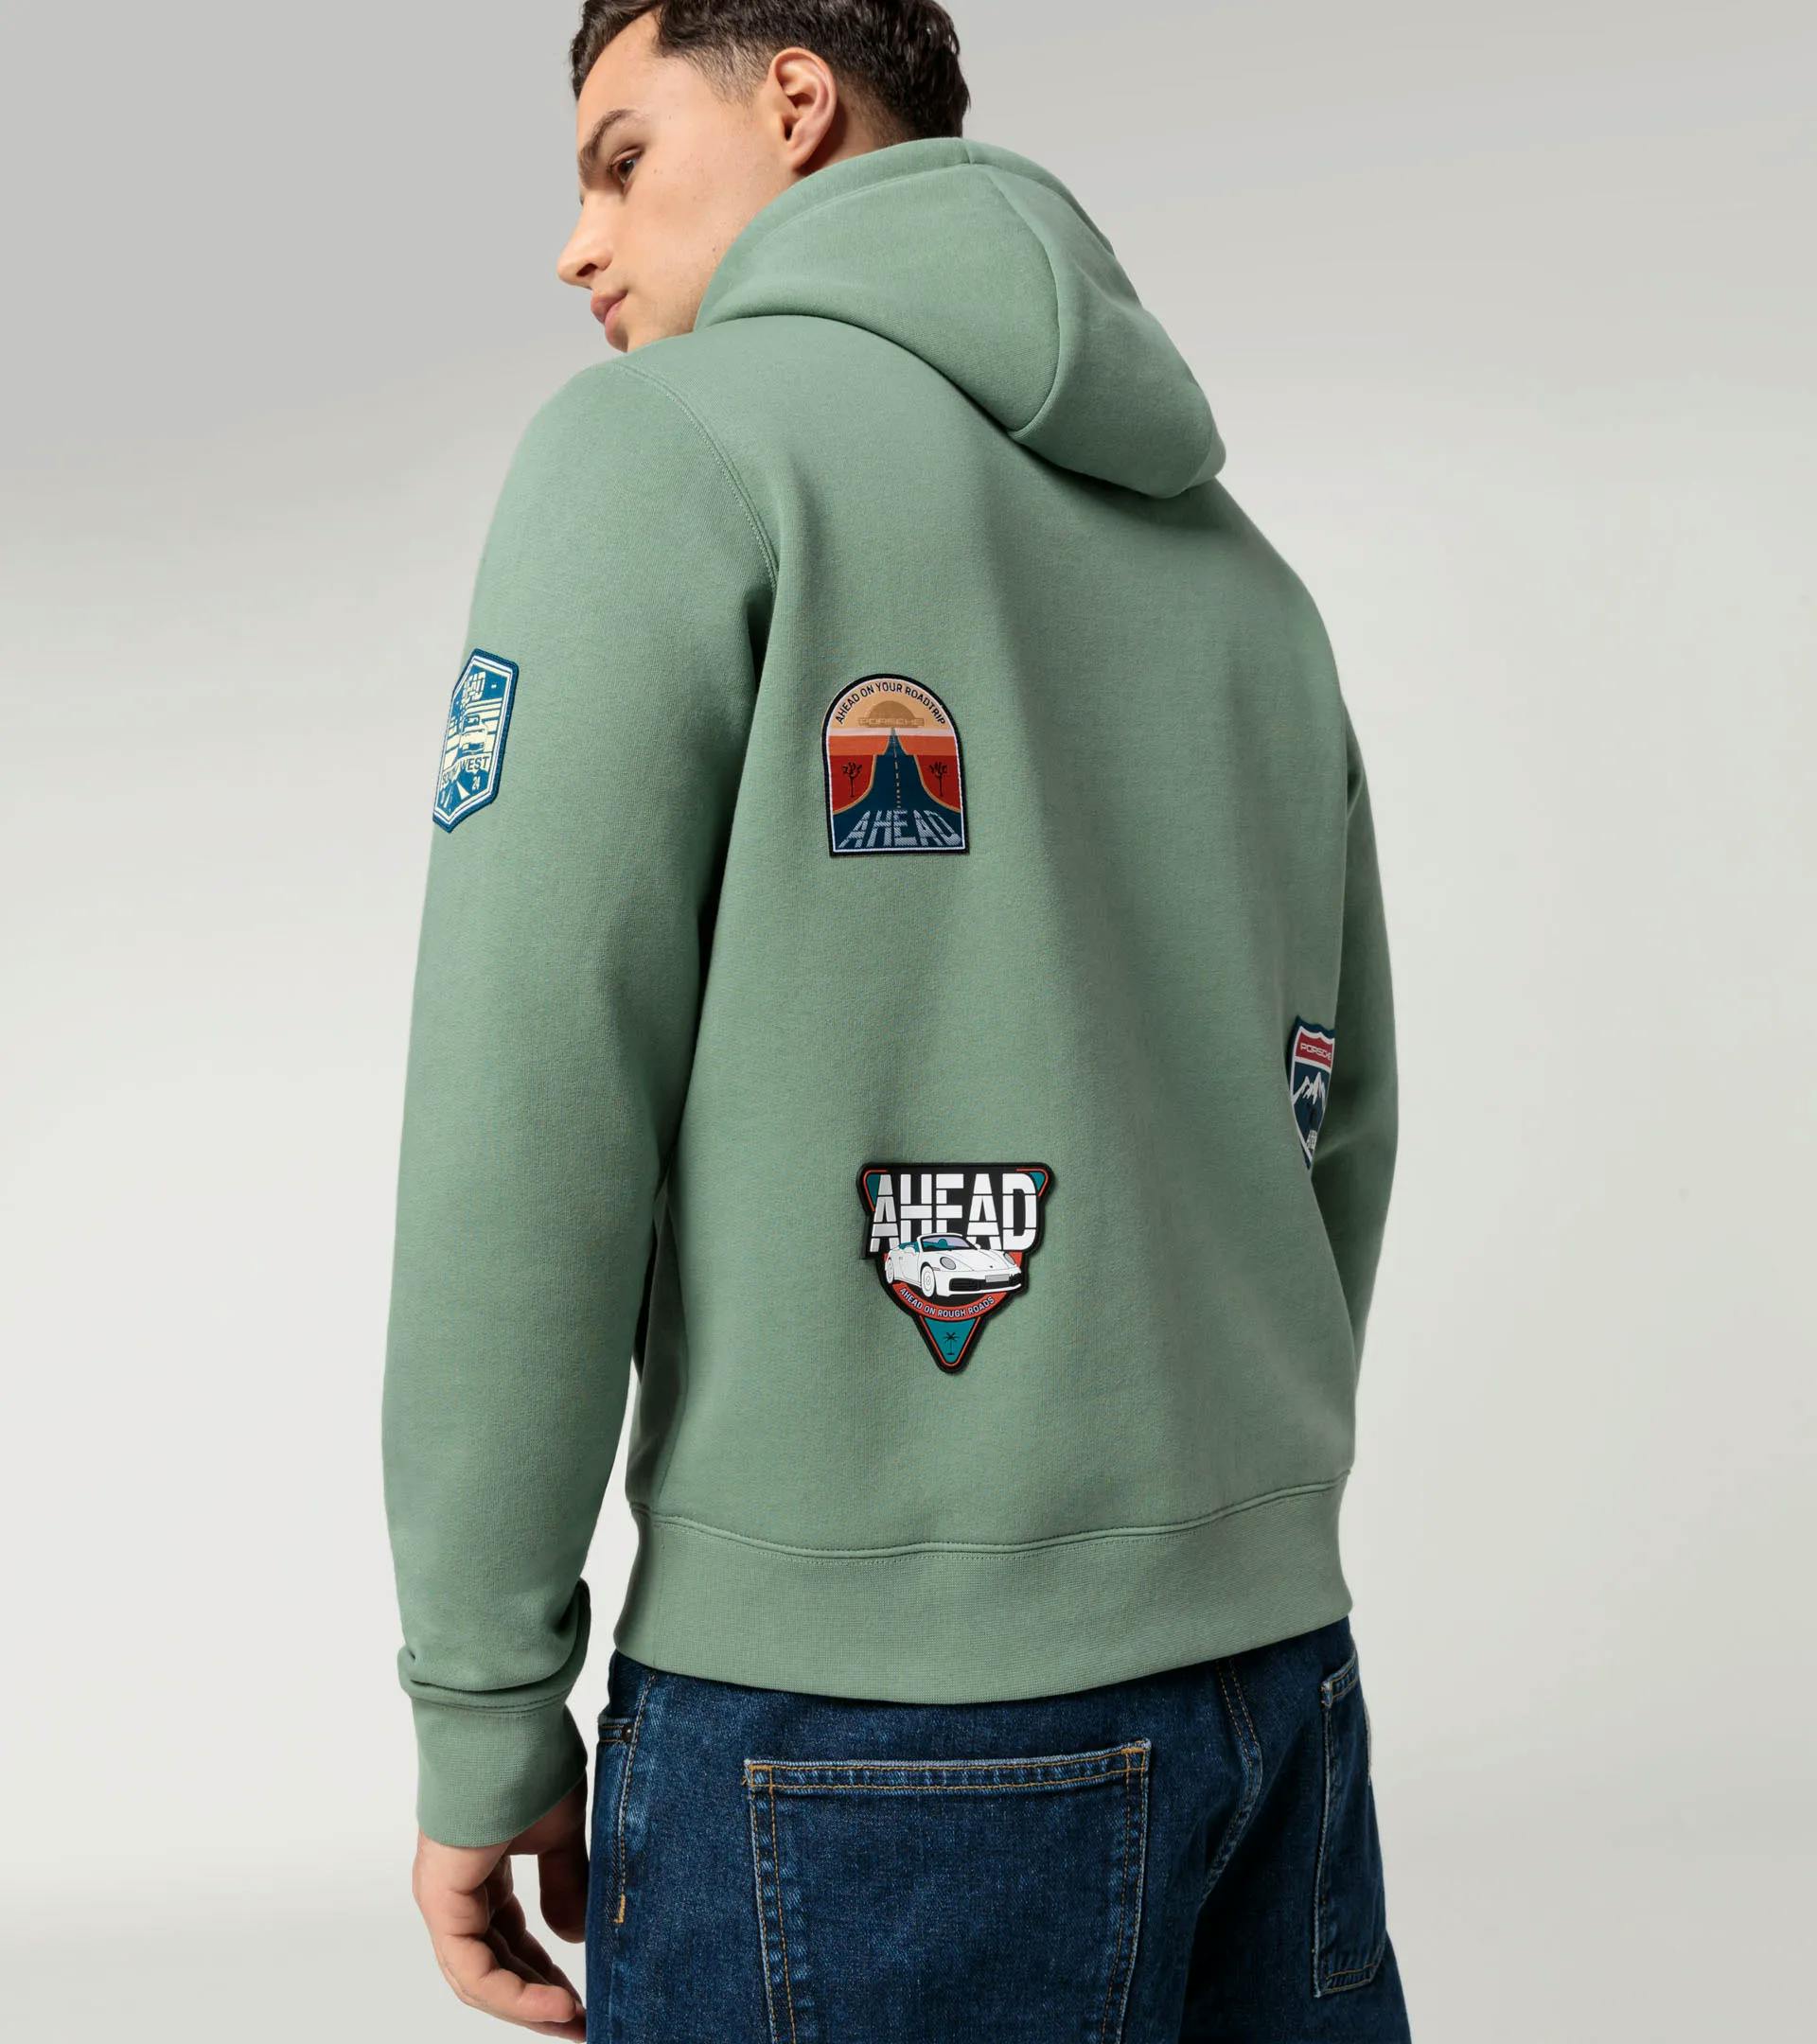 Unisex AHEAD collector's hoodie 4